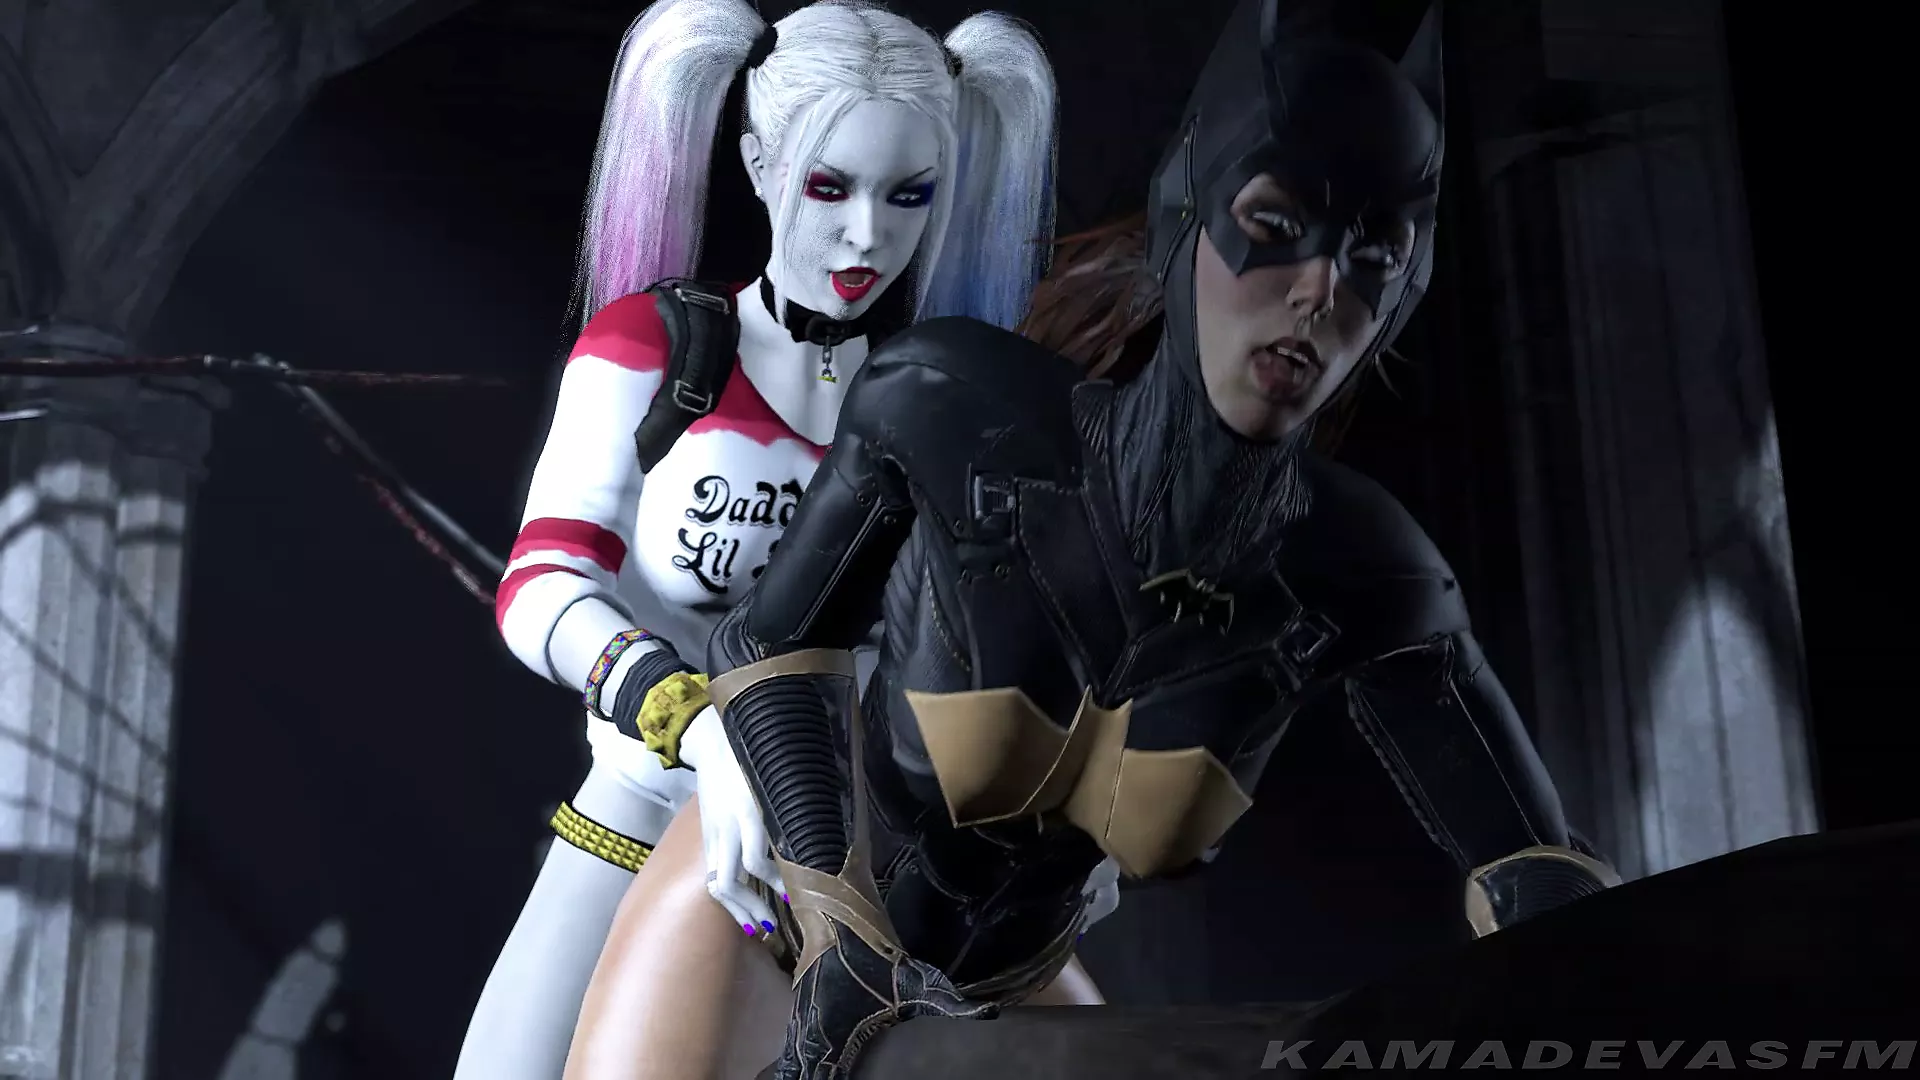 Harley Quinn - Harley Quinn Batman Porn Asylum - Episode 3 watch online or download